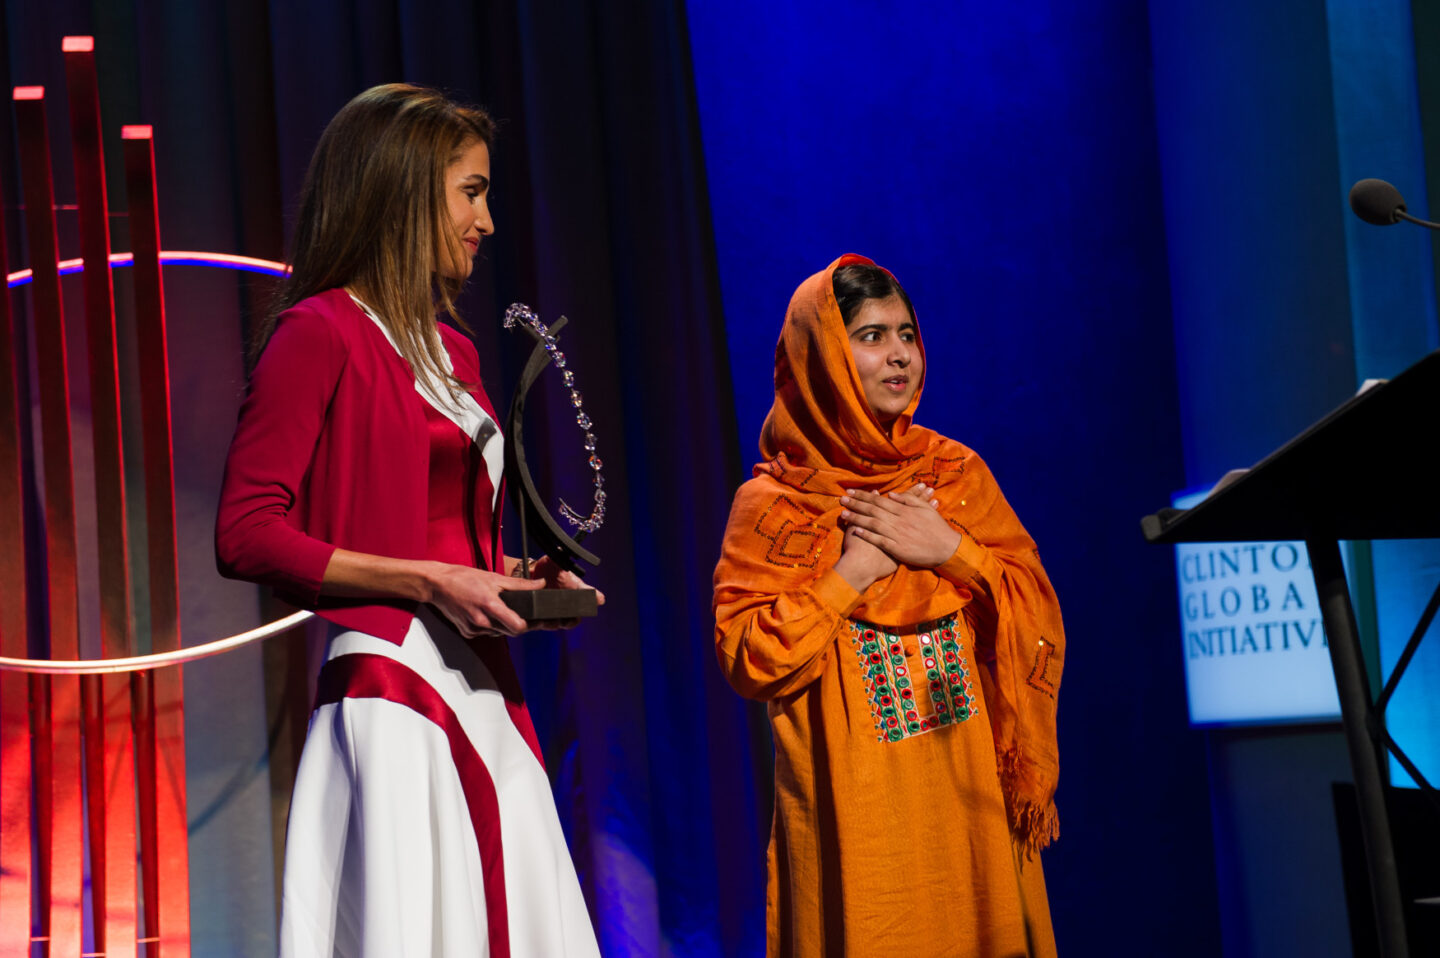 Queen Rania Al Abdullah hands an award to Malala Yousafzai